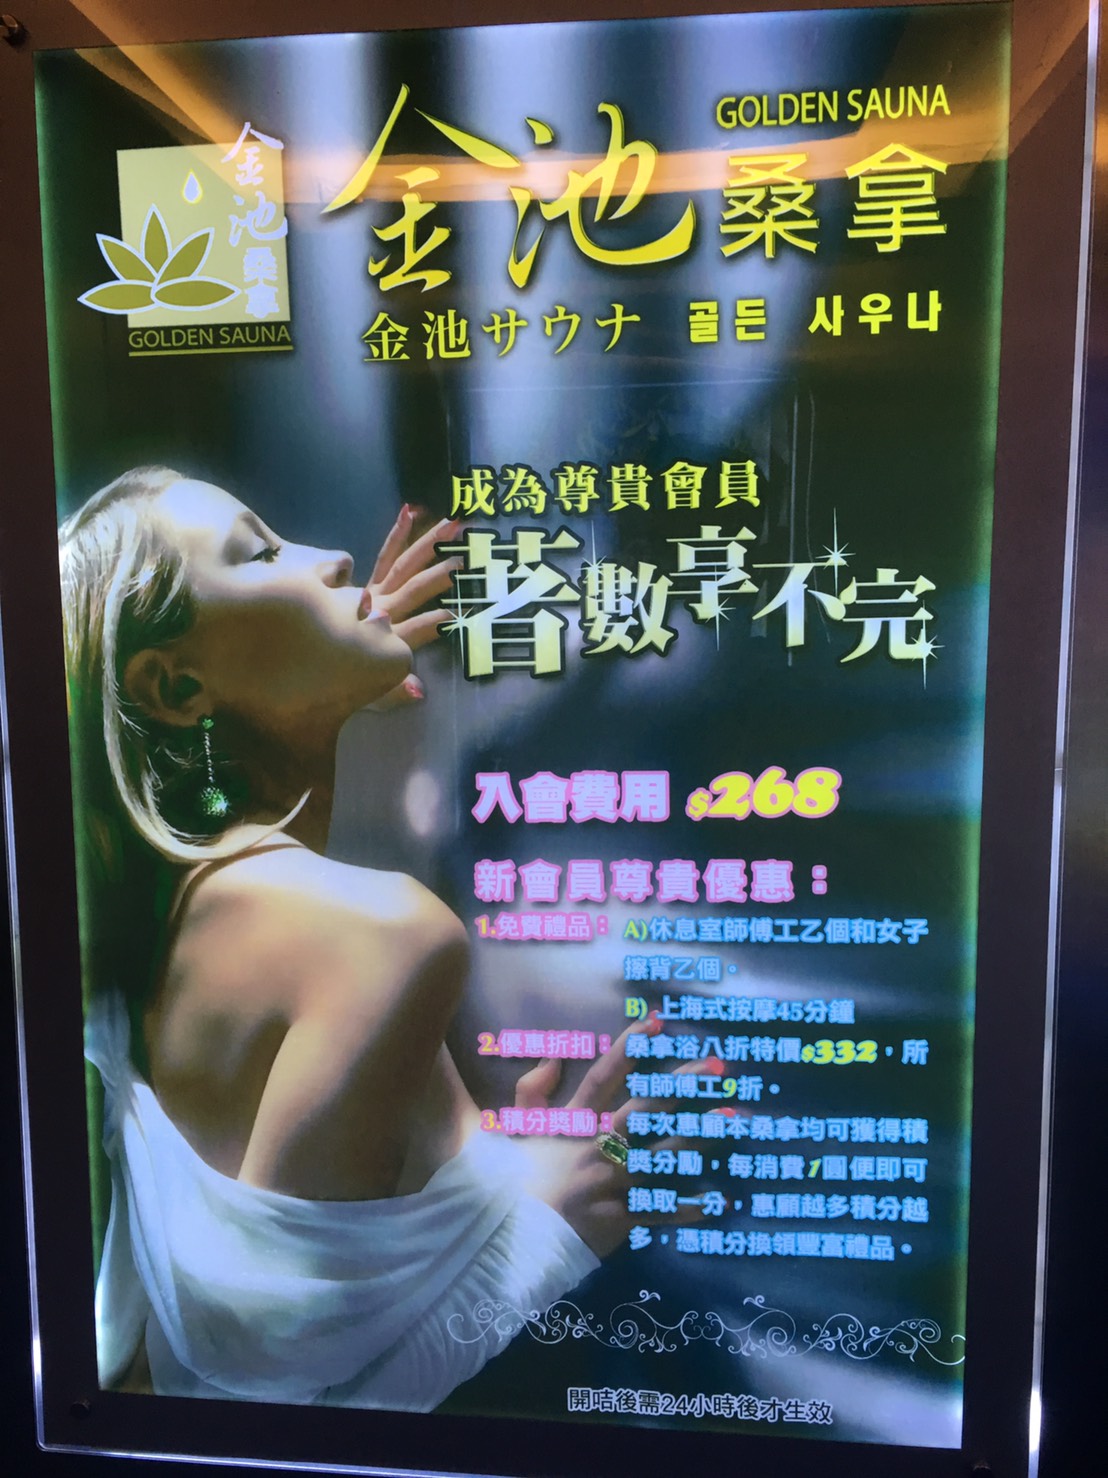 Golden-Sauna-Macau-The-Best-Sauna-in-Macao